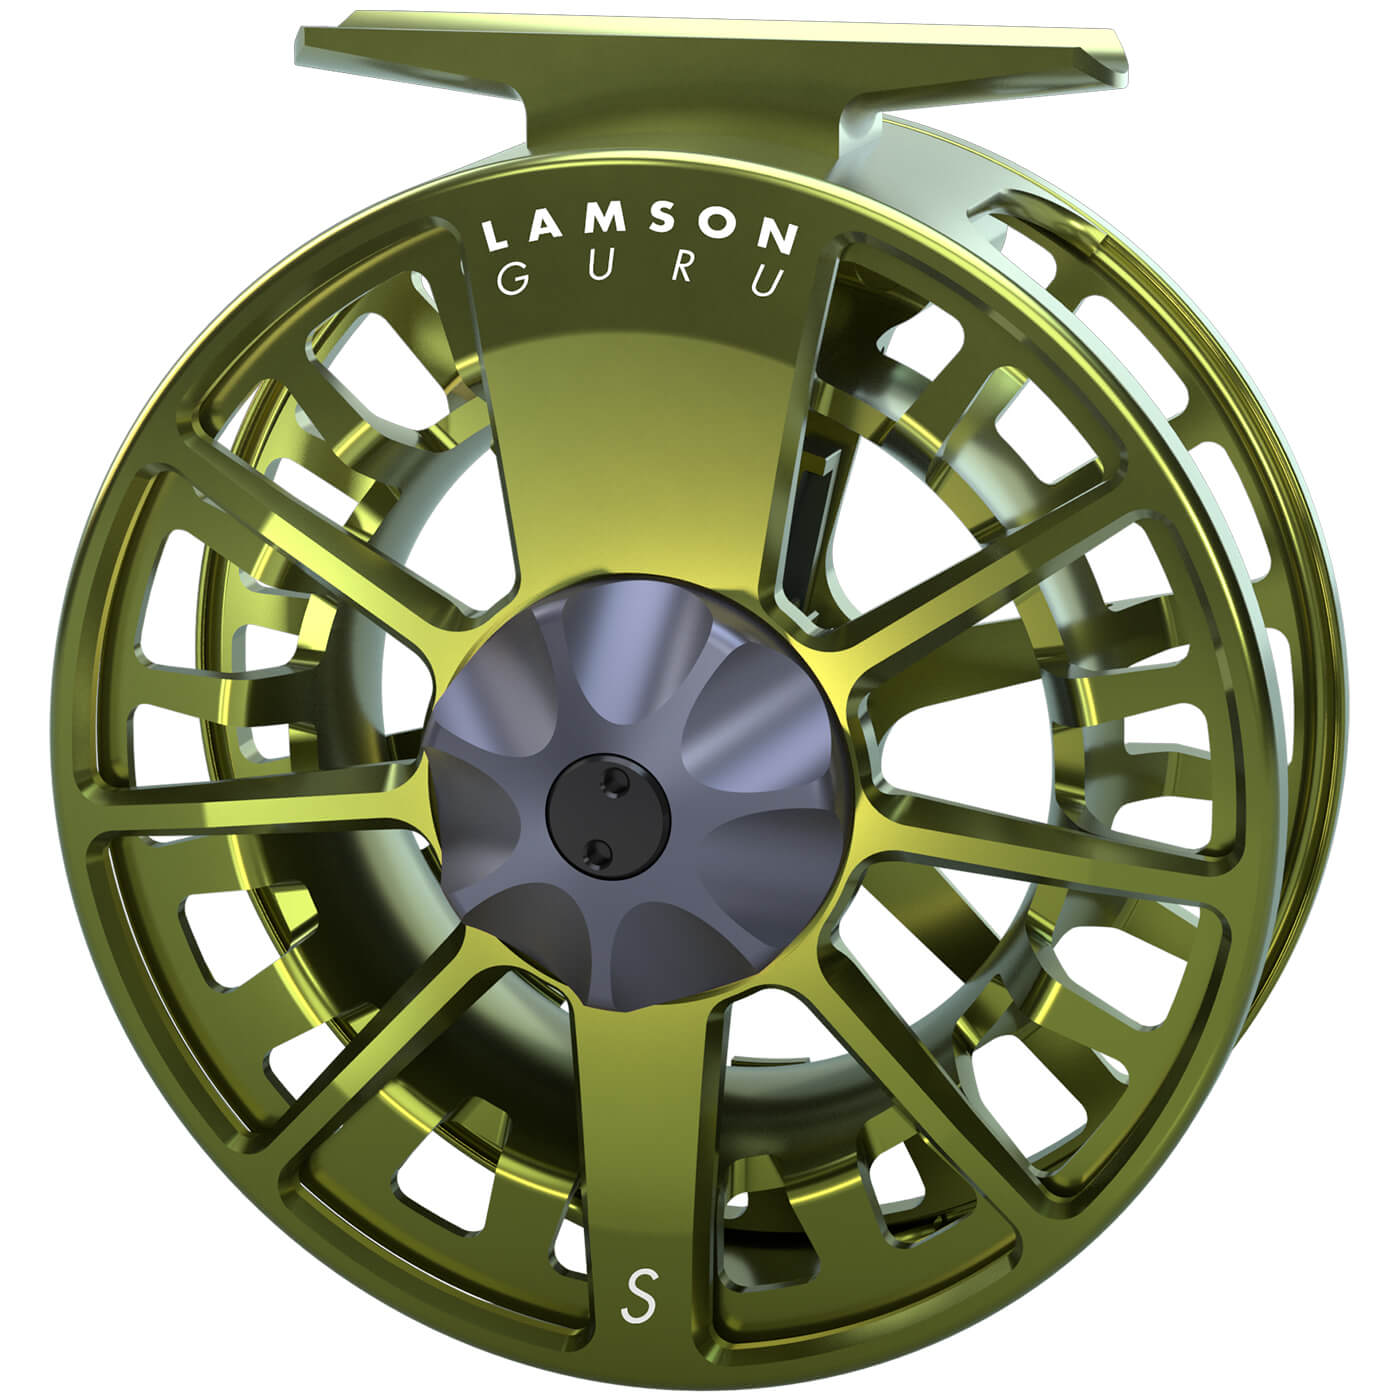 Waterworks-Lamson Fly Reel 7-8 Line Weight Fishing Reels for sale